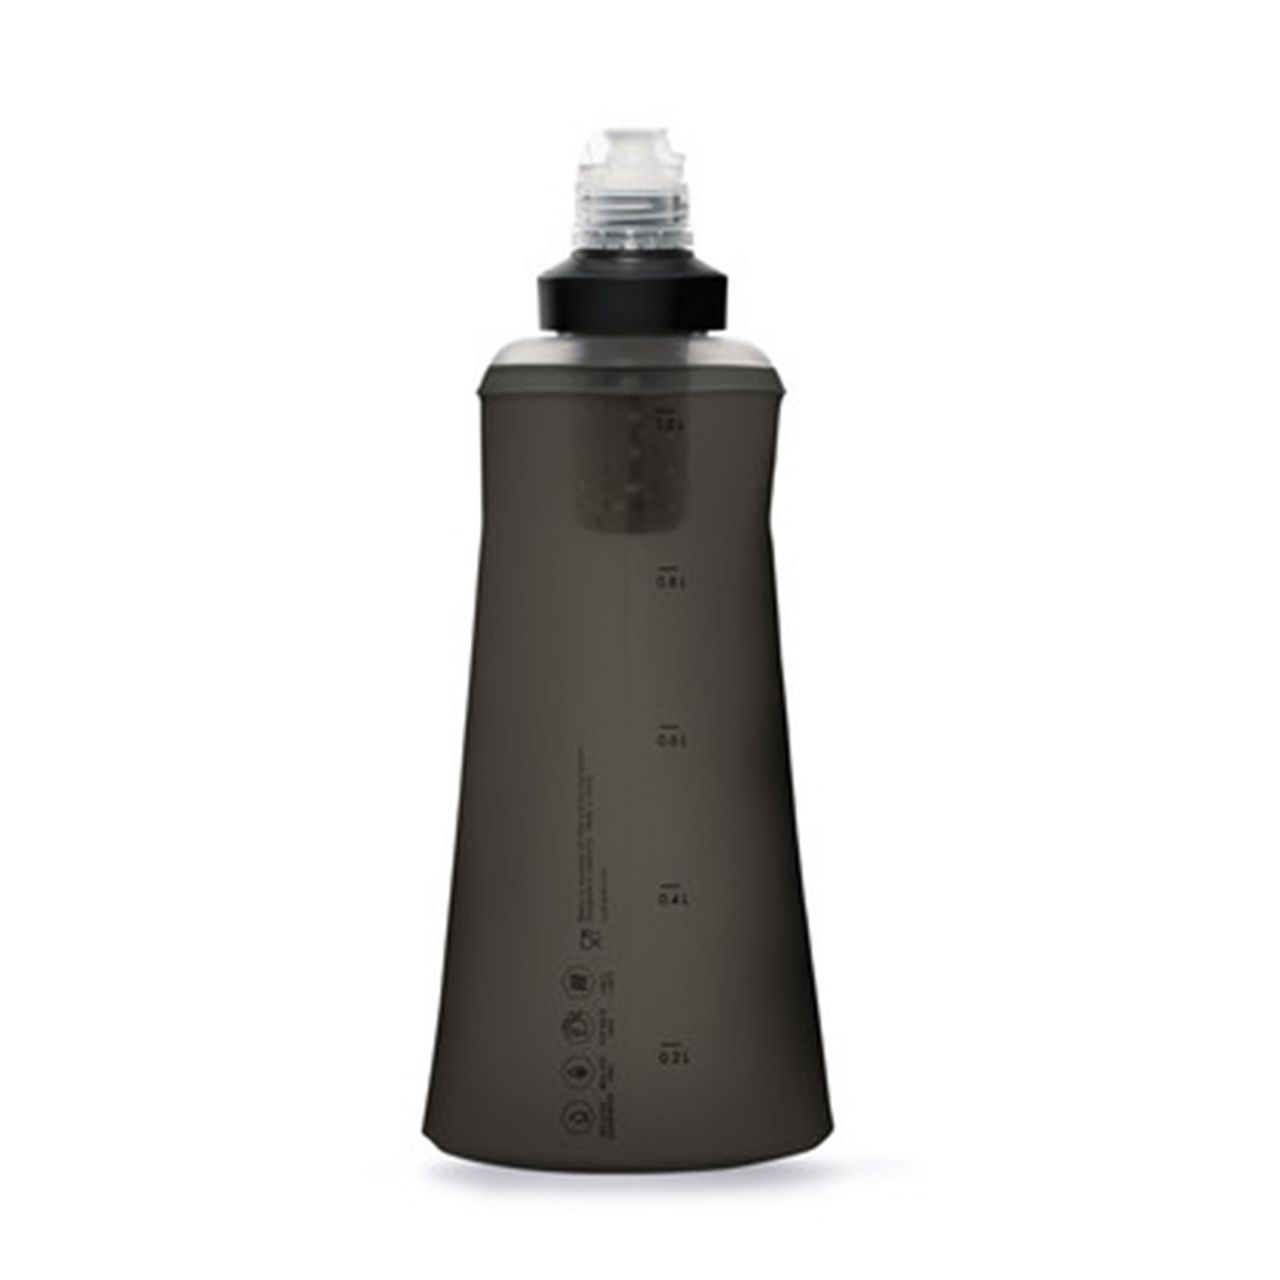 KATADYN Trinkflasche "BeFree Filter 1.0 L Wasserfilter" Black Edition